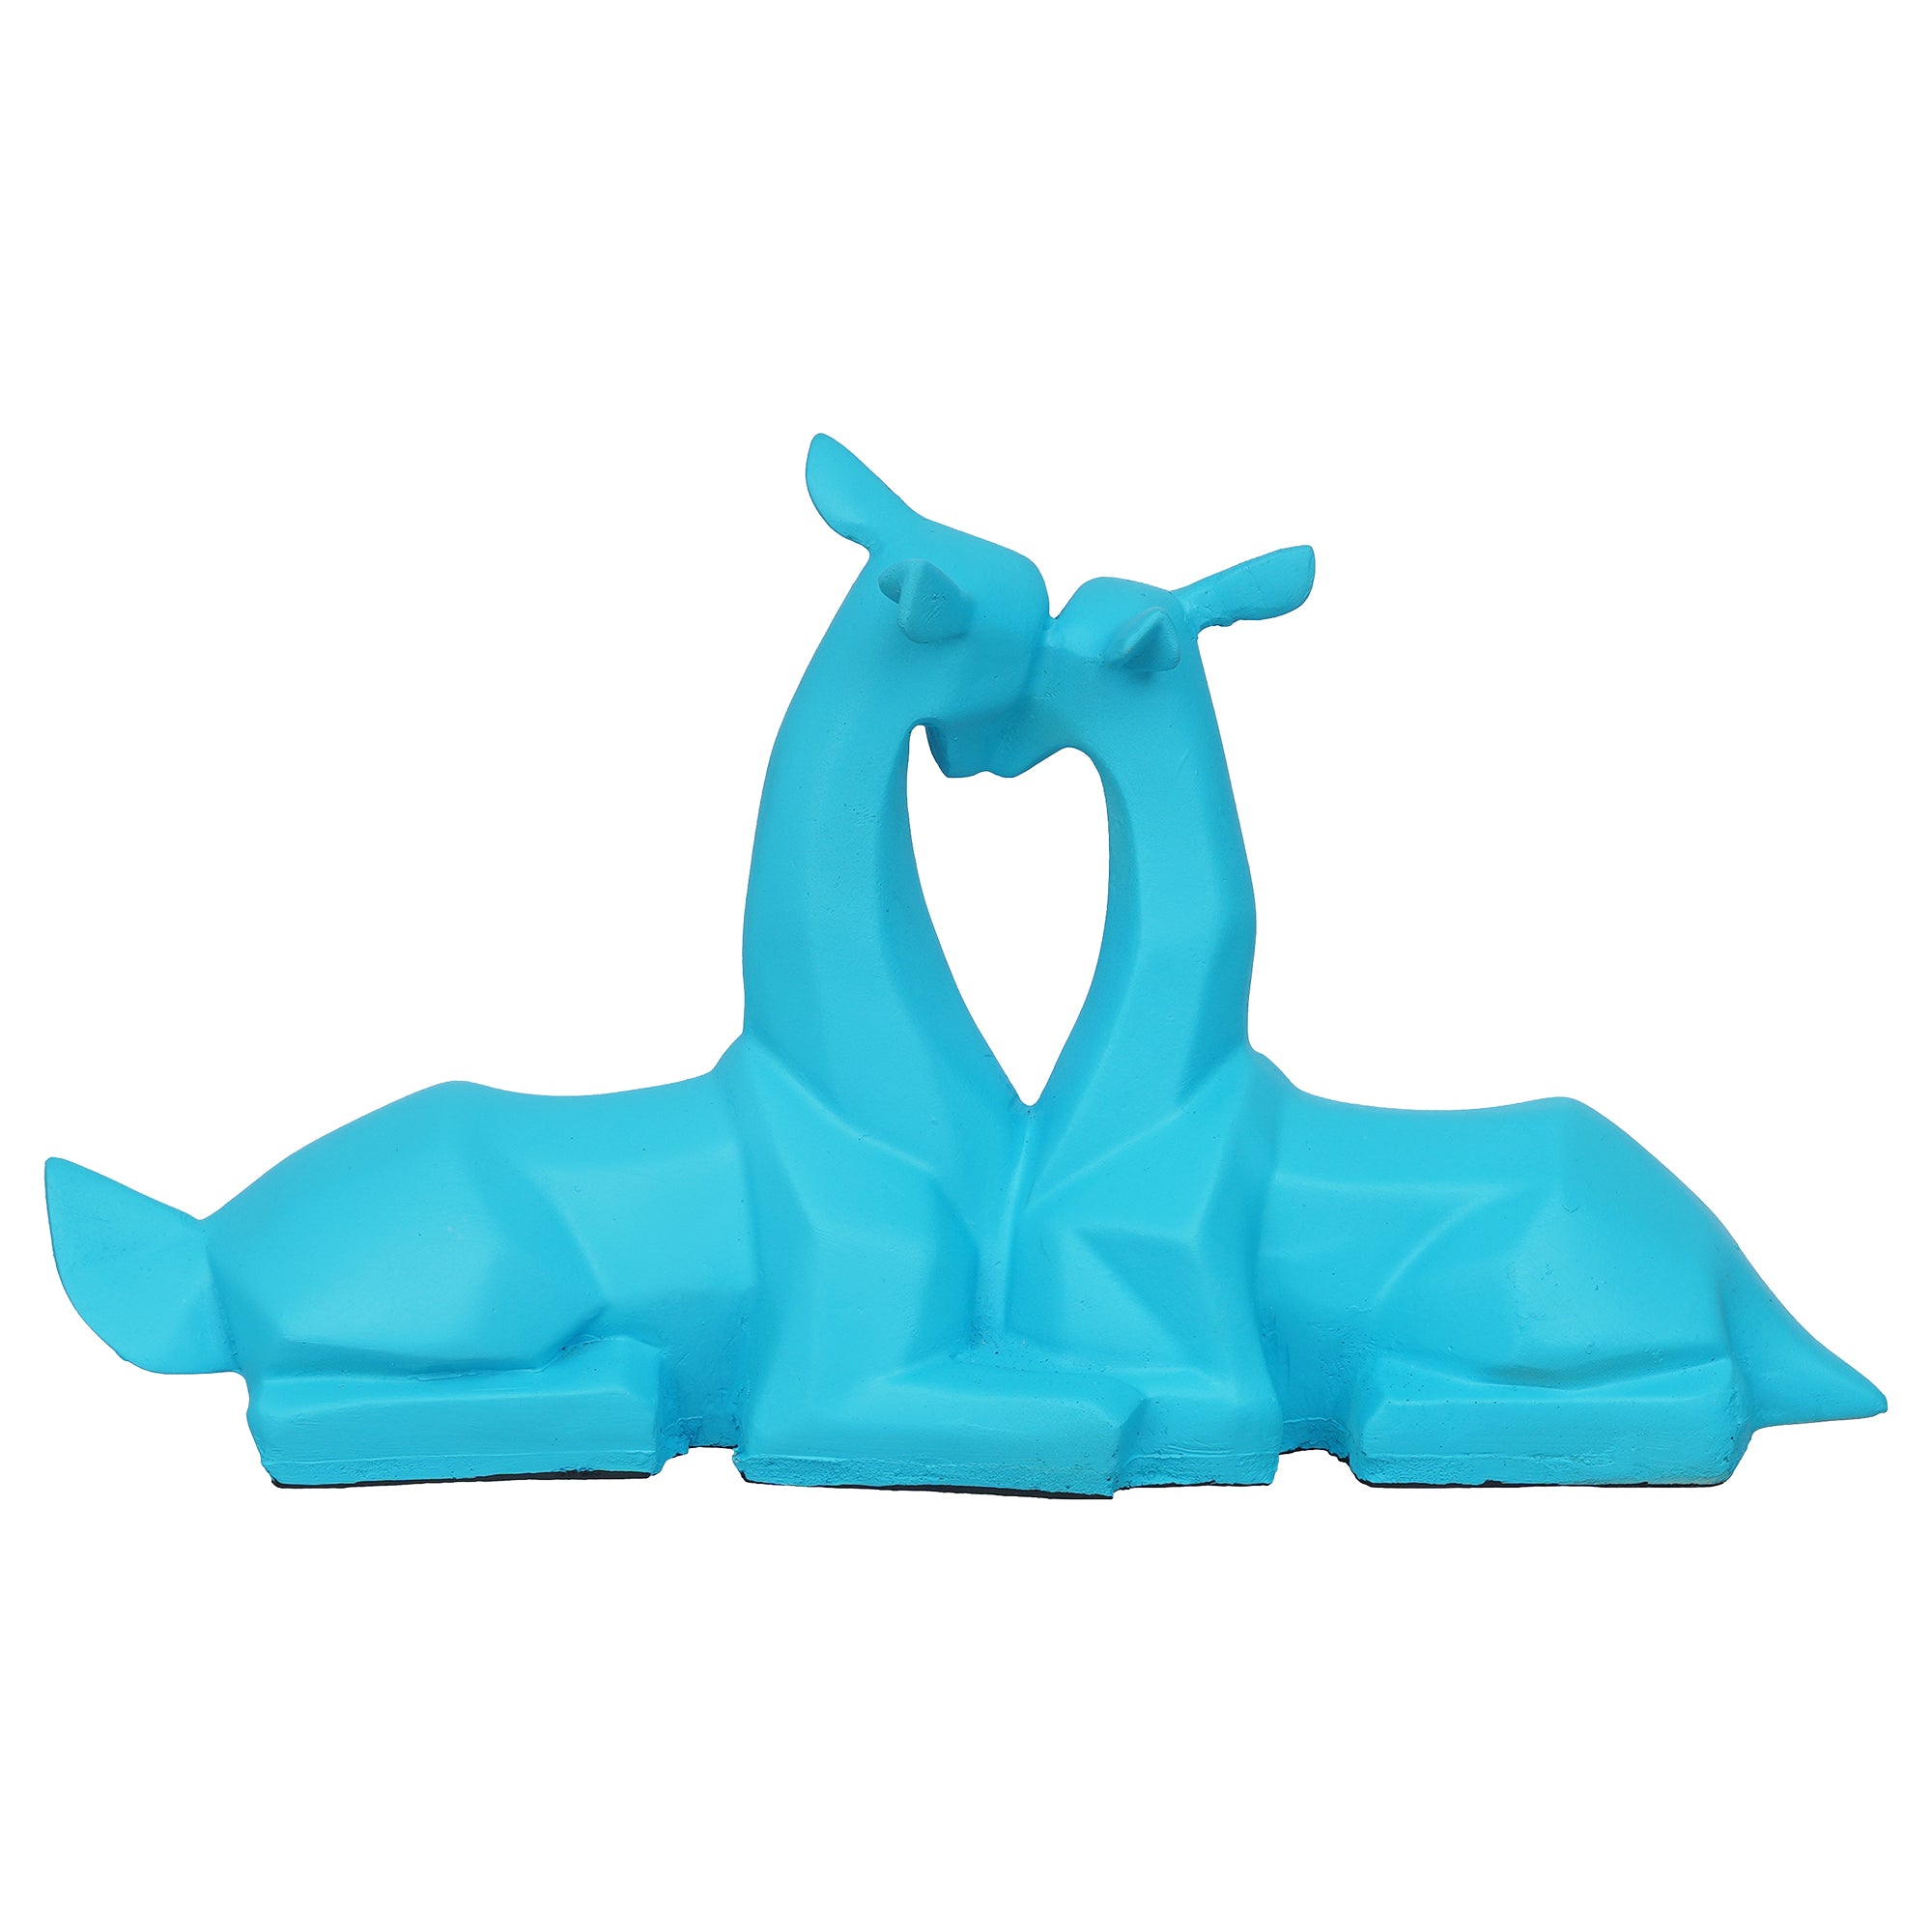 eCraftIndia Blue Polyresin Couple Deer Statues Animal Figurines Decorative Showpieces 8